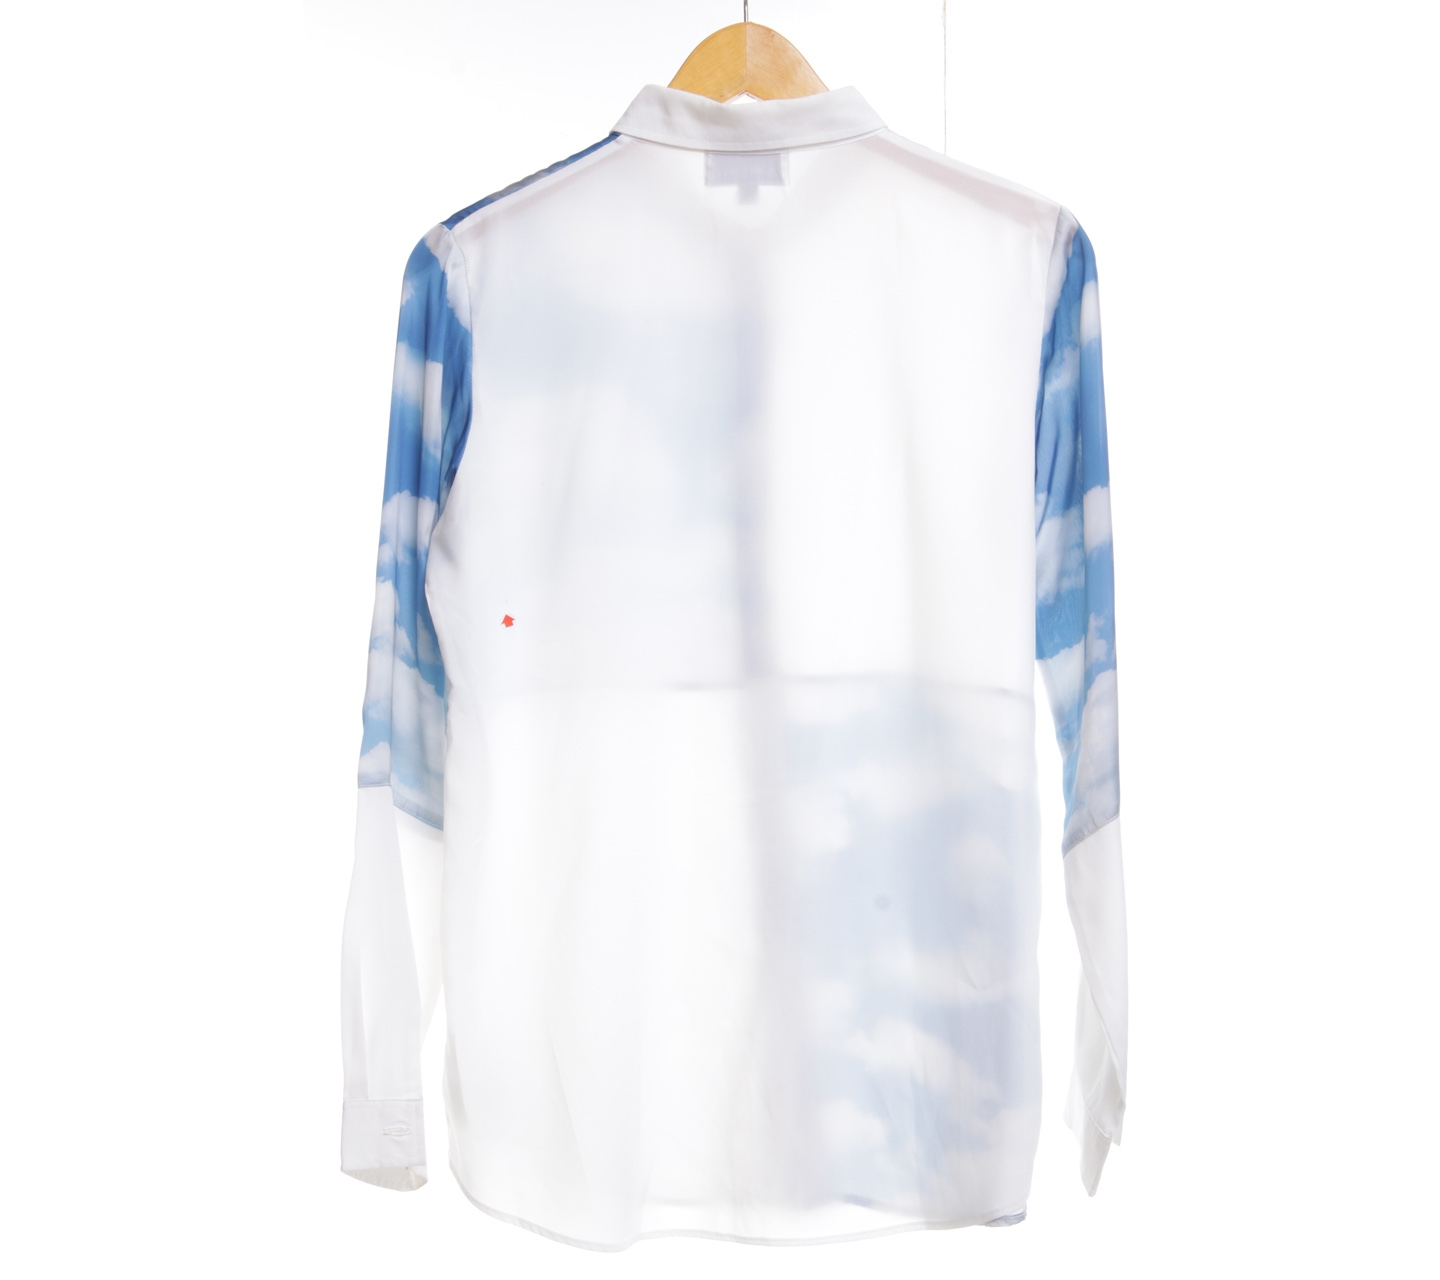 Alexaalexa White & Blue Sky Print Shirt